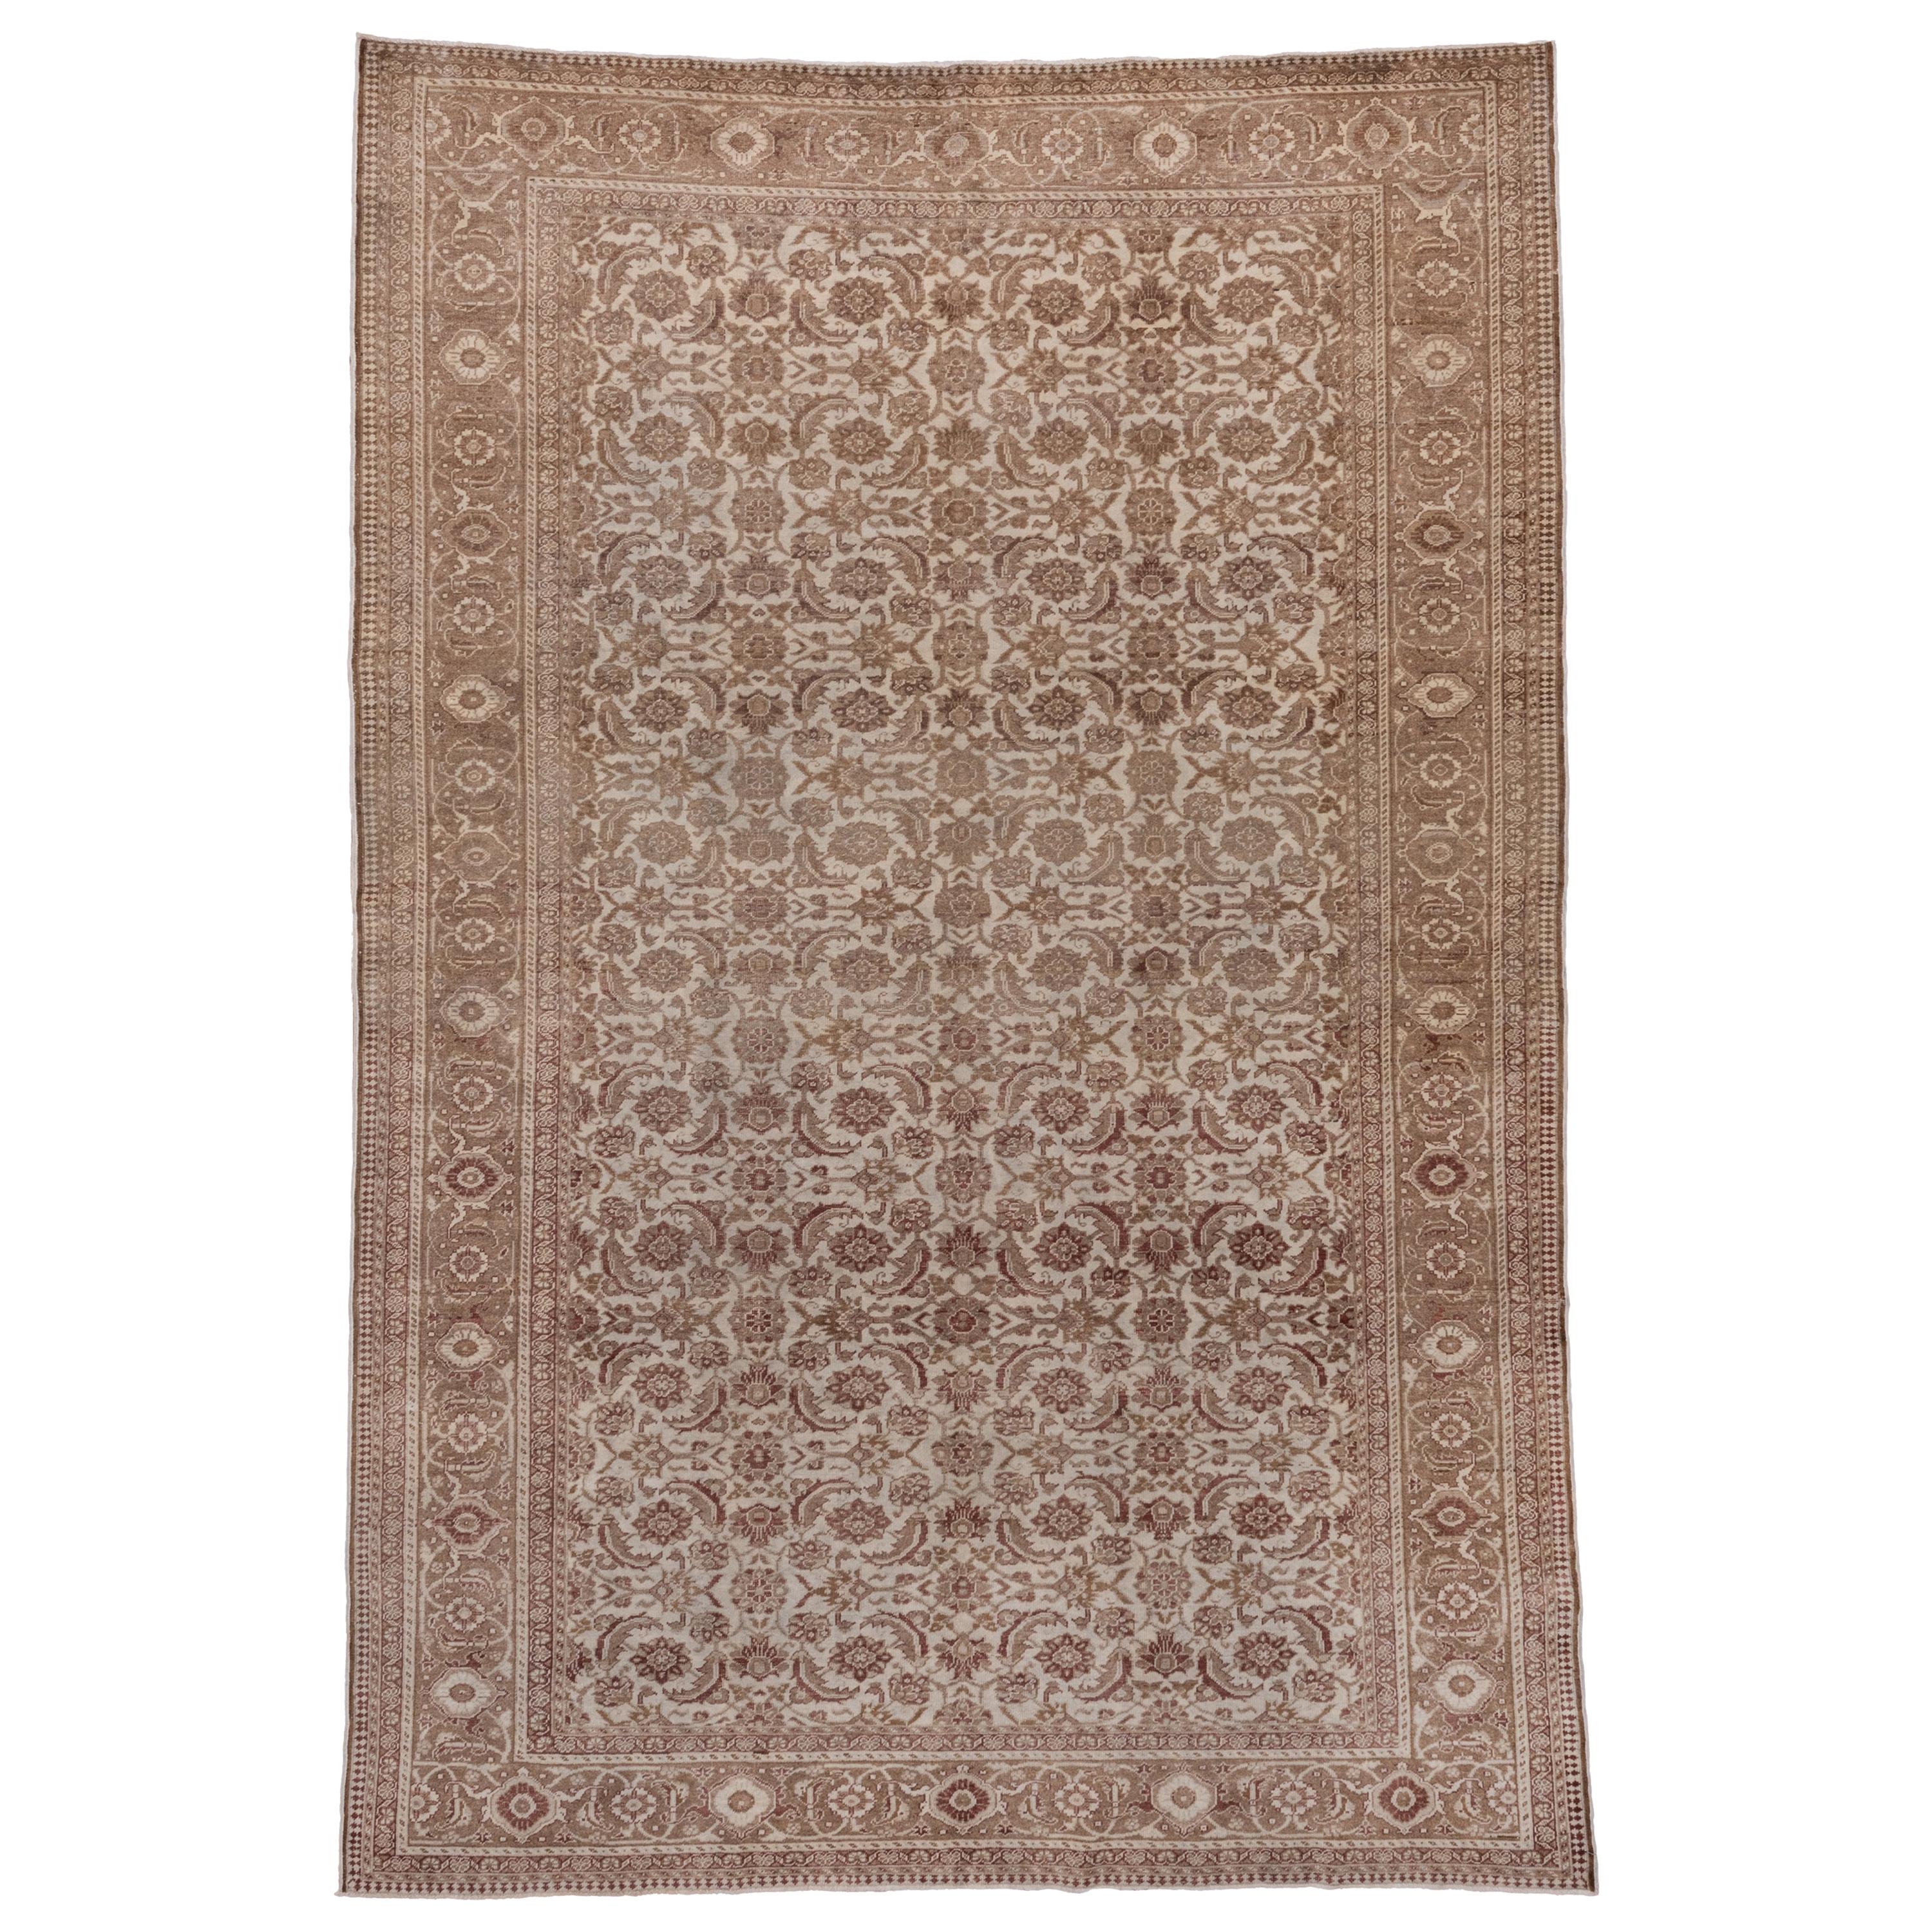 Antique Kaisary Carpet, Neutral Palette, circa 1920s